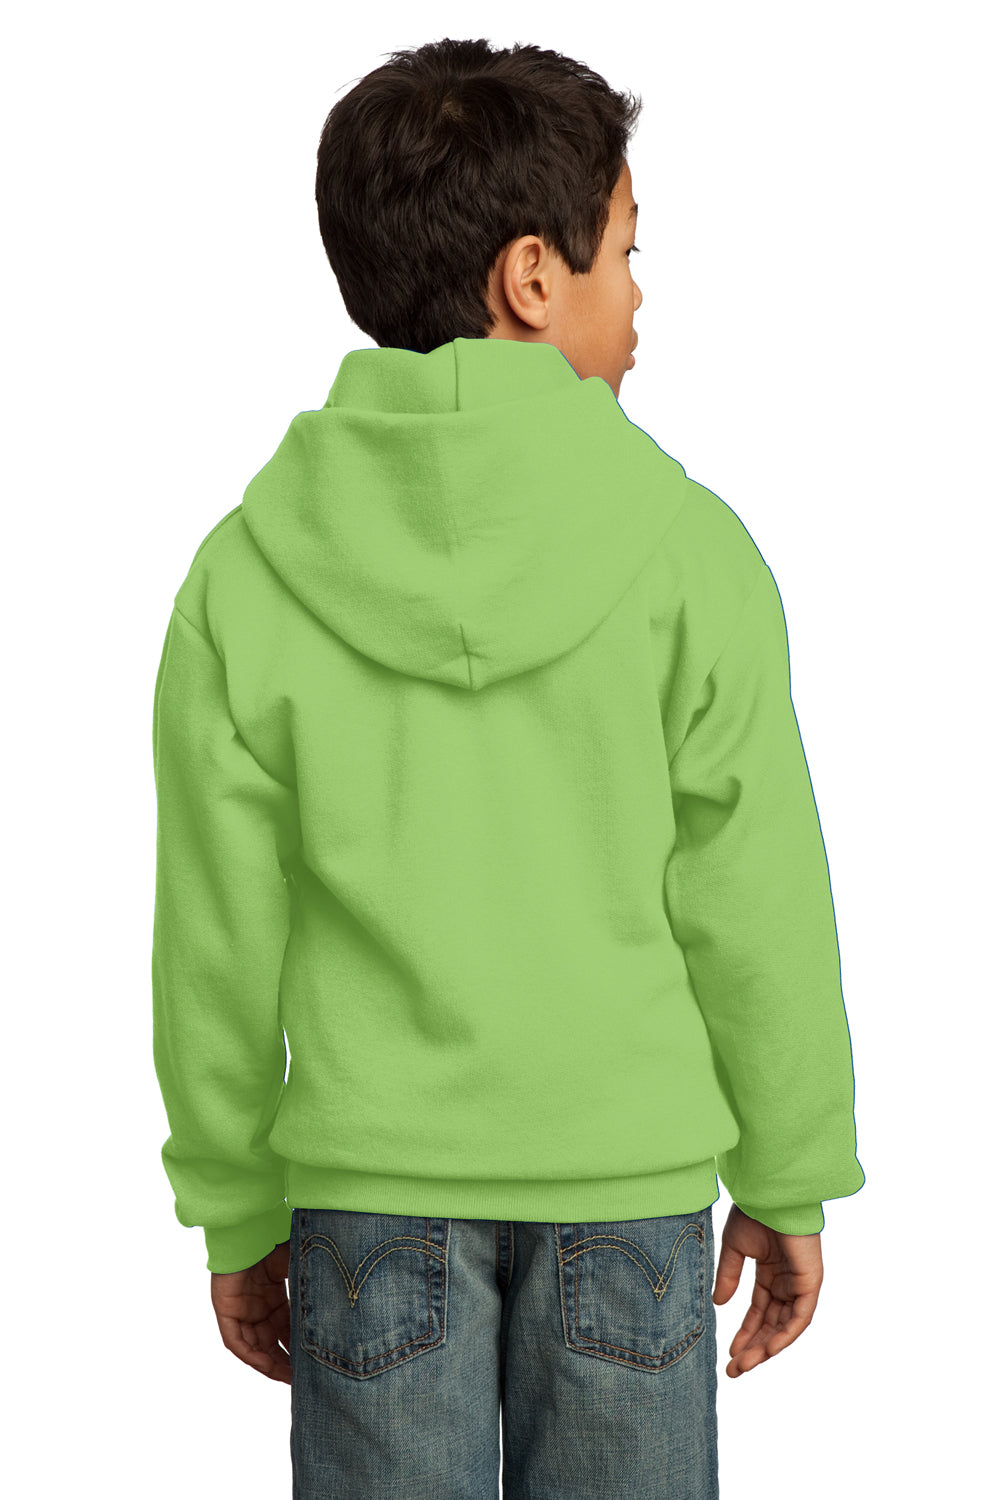 Port & Company PC90YH Youth Core Fleece Hooded Sweatshirt Hoodie Lime Green Back